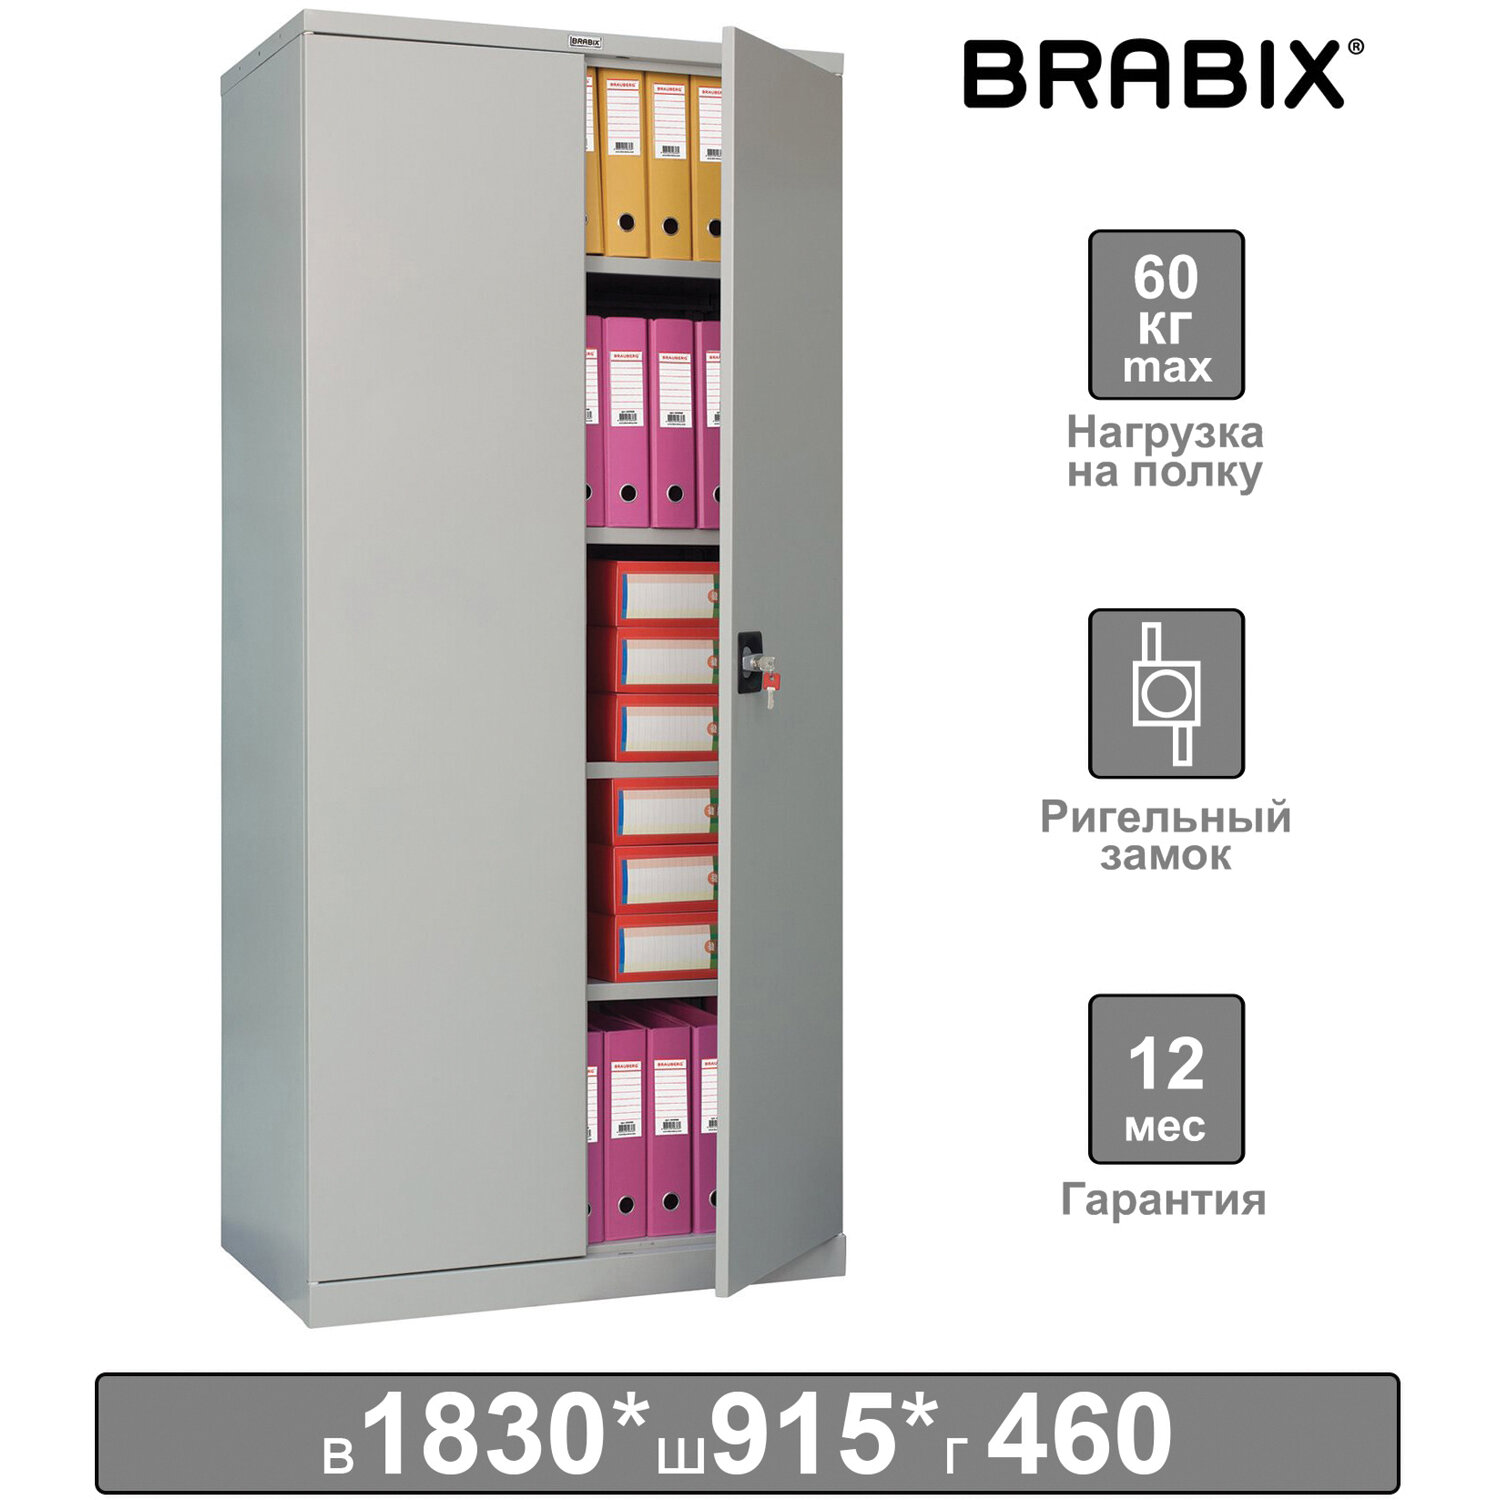 Brabix Шкаф металлический офисный BRABIX MK 18/91/46, 1830х915х460 мм, 47 кг, 4 полки, разборный, 291136, S204BR180202